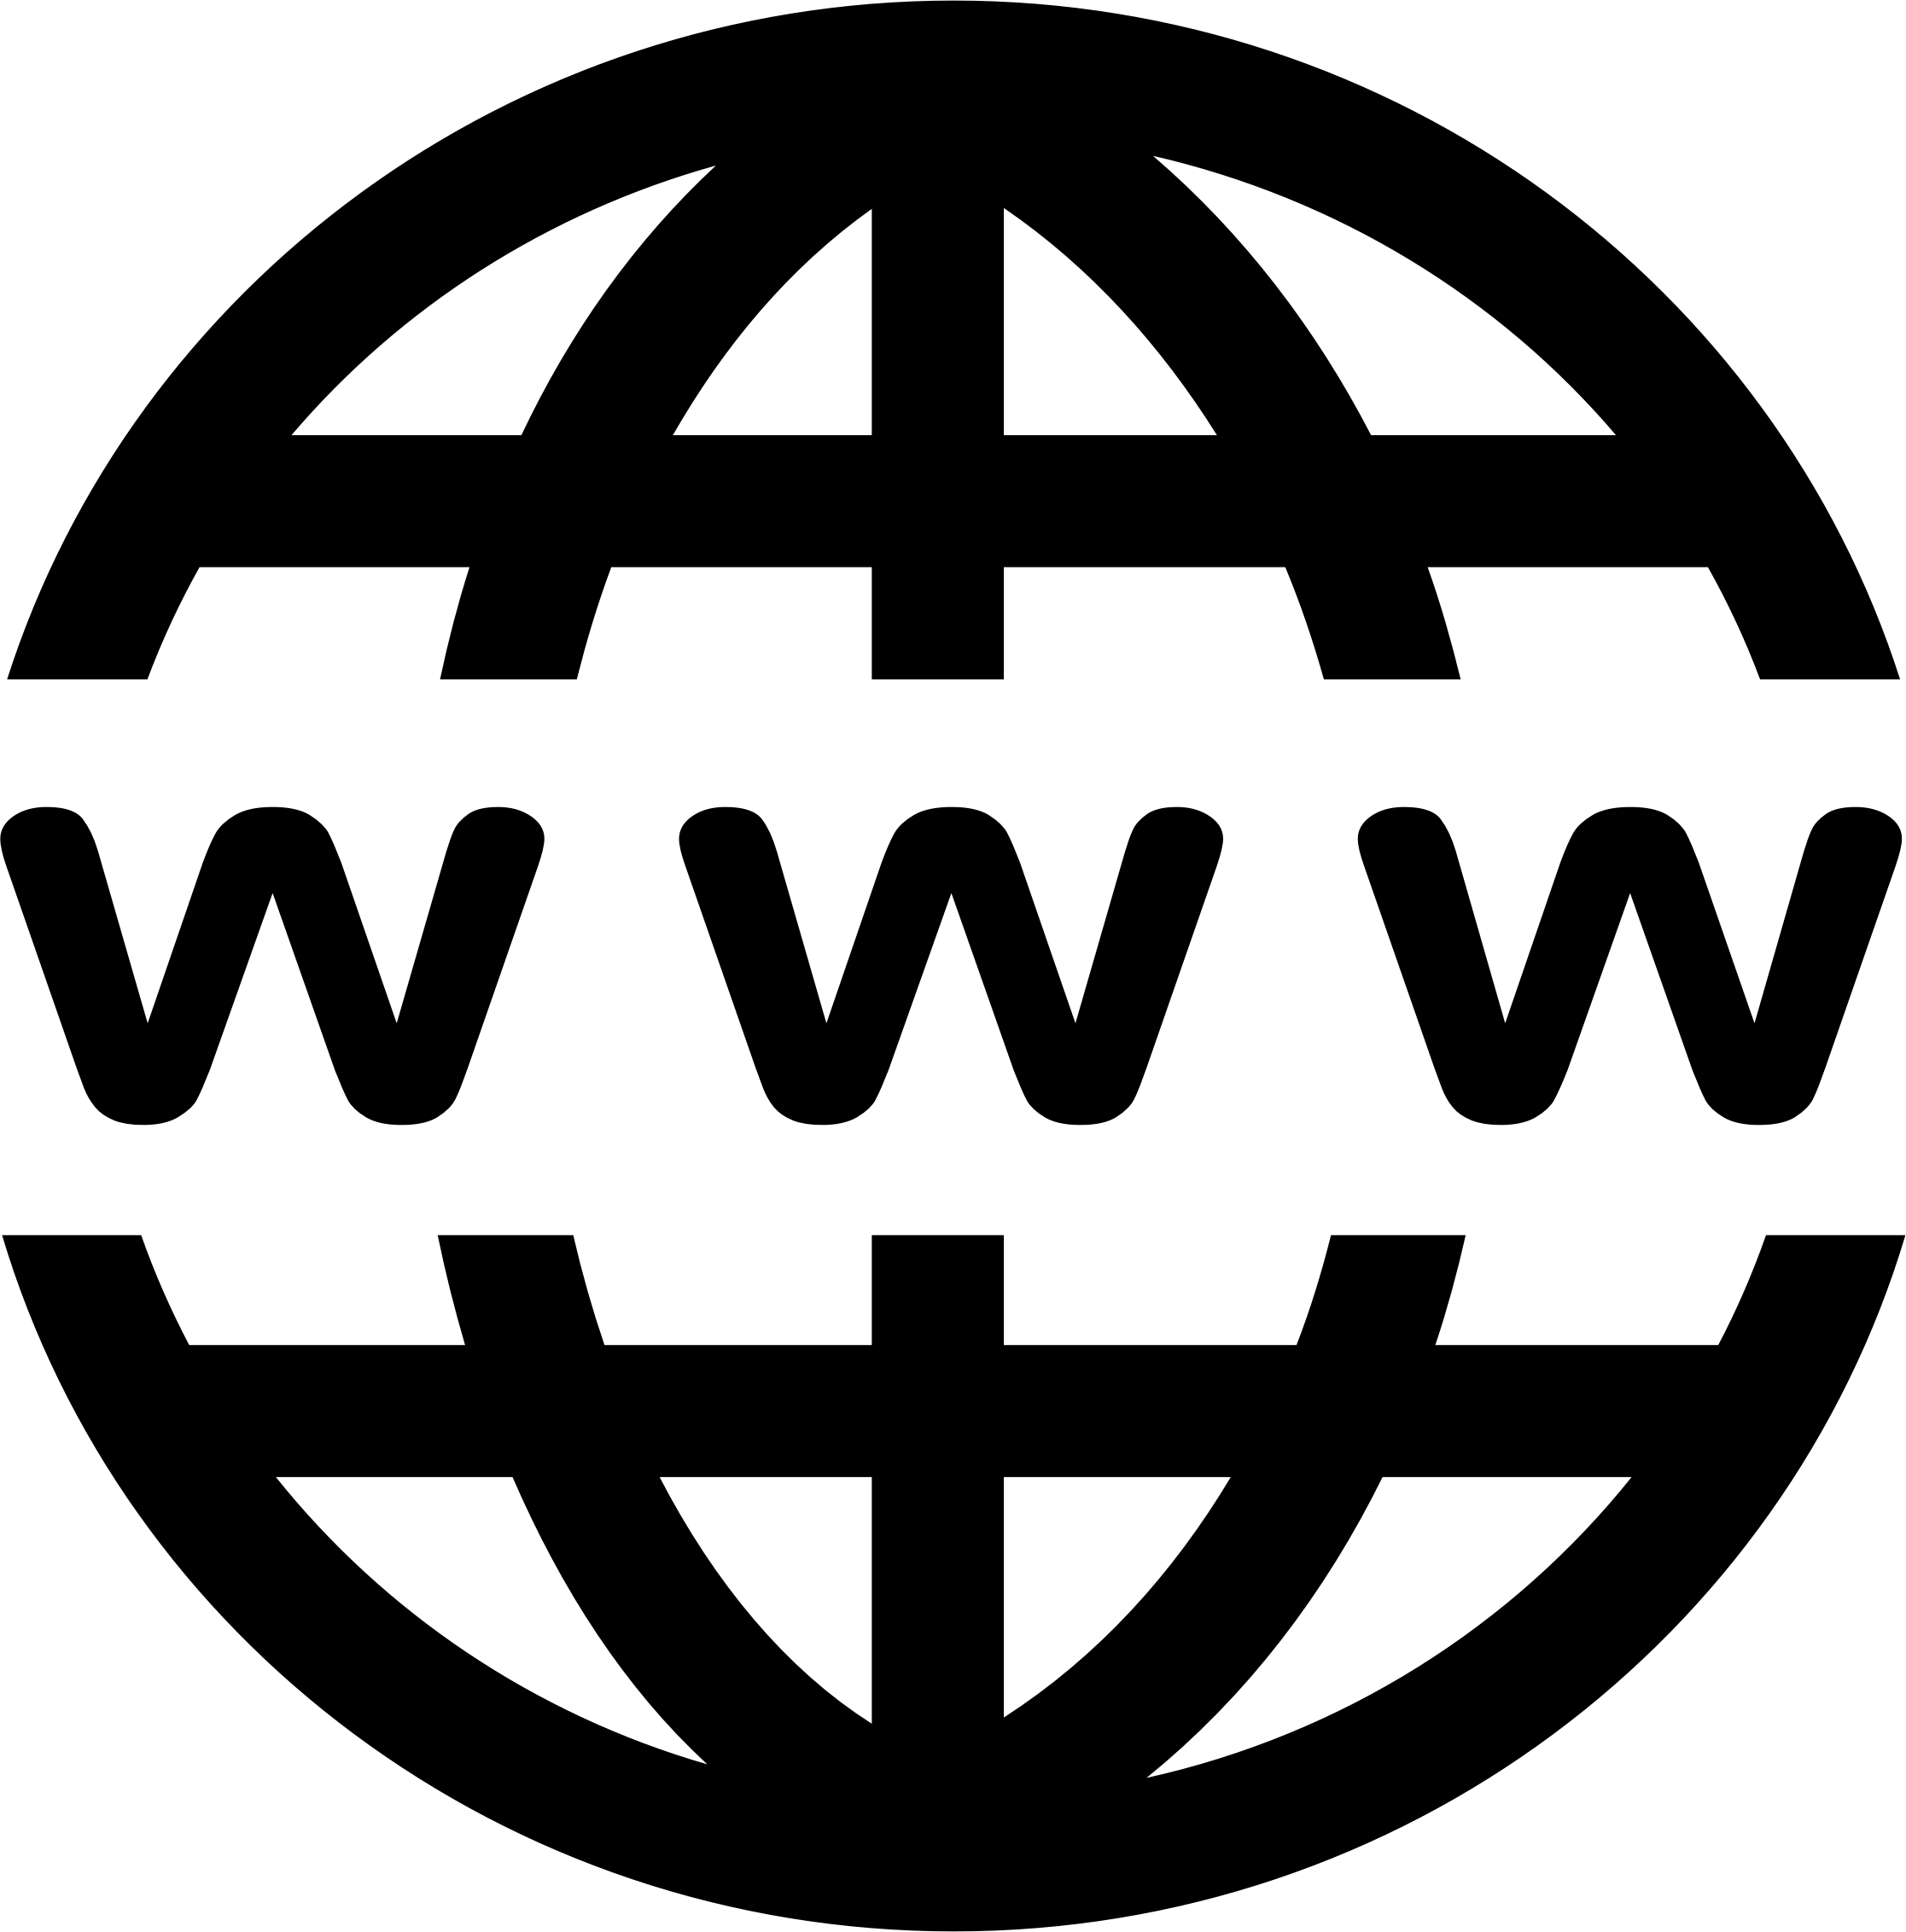 Internet Logo - World Wide Web | The Internet | Know Your Meme